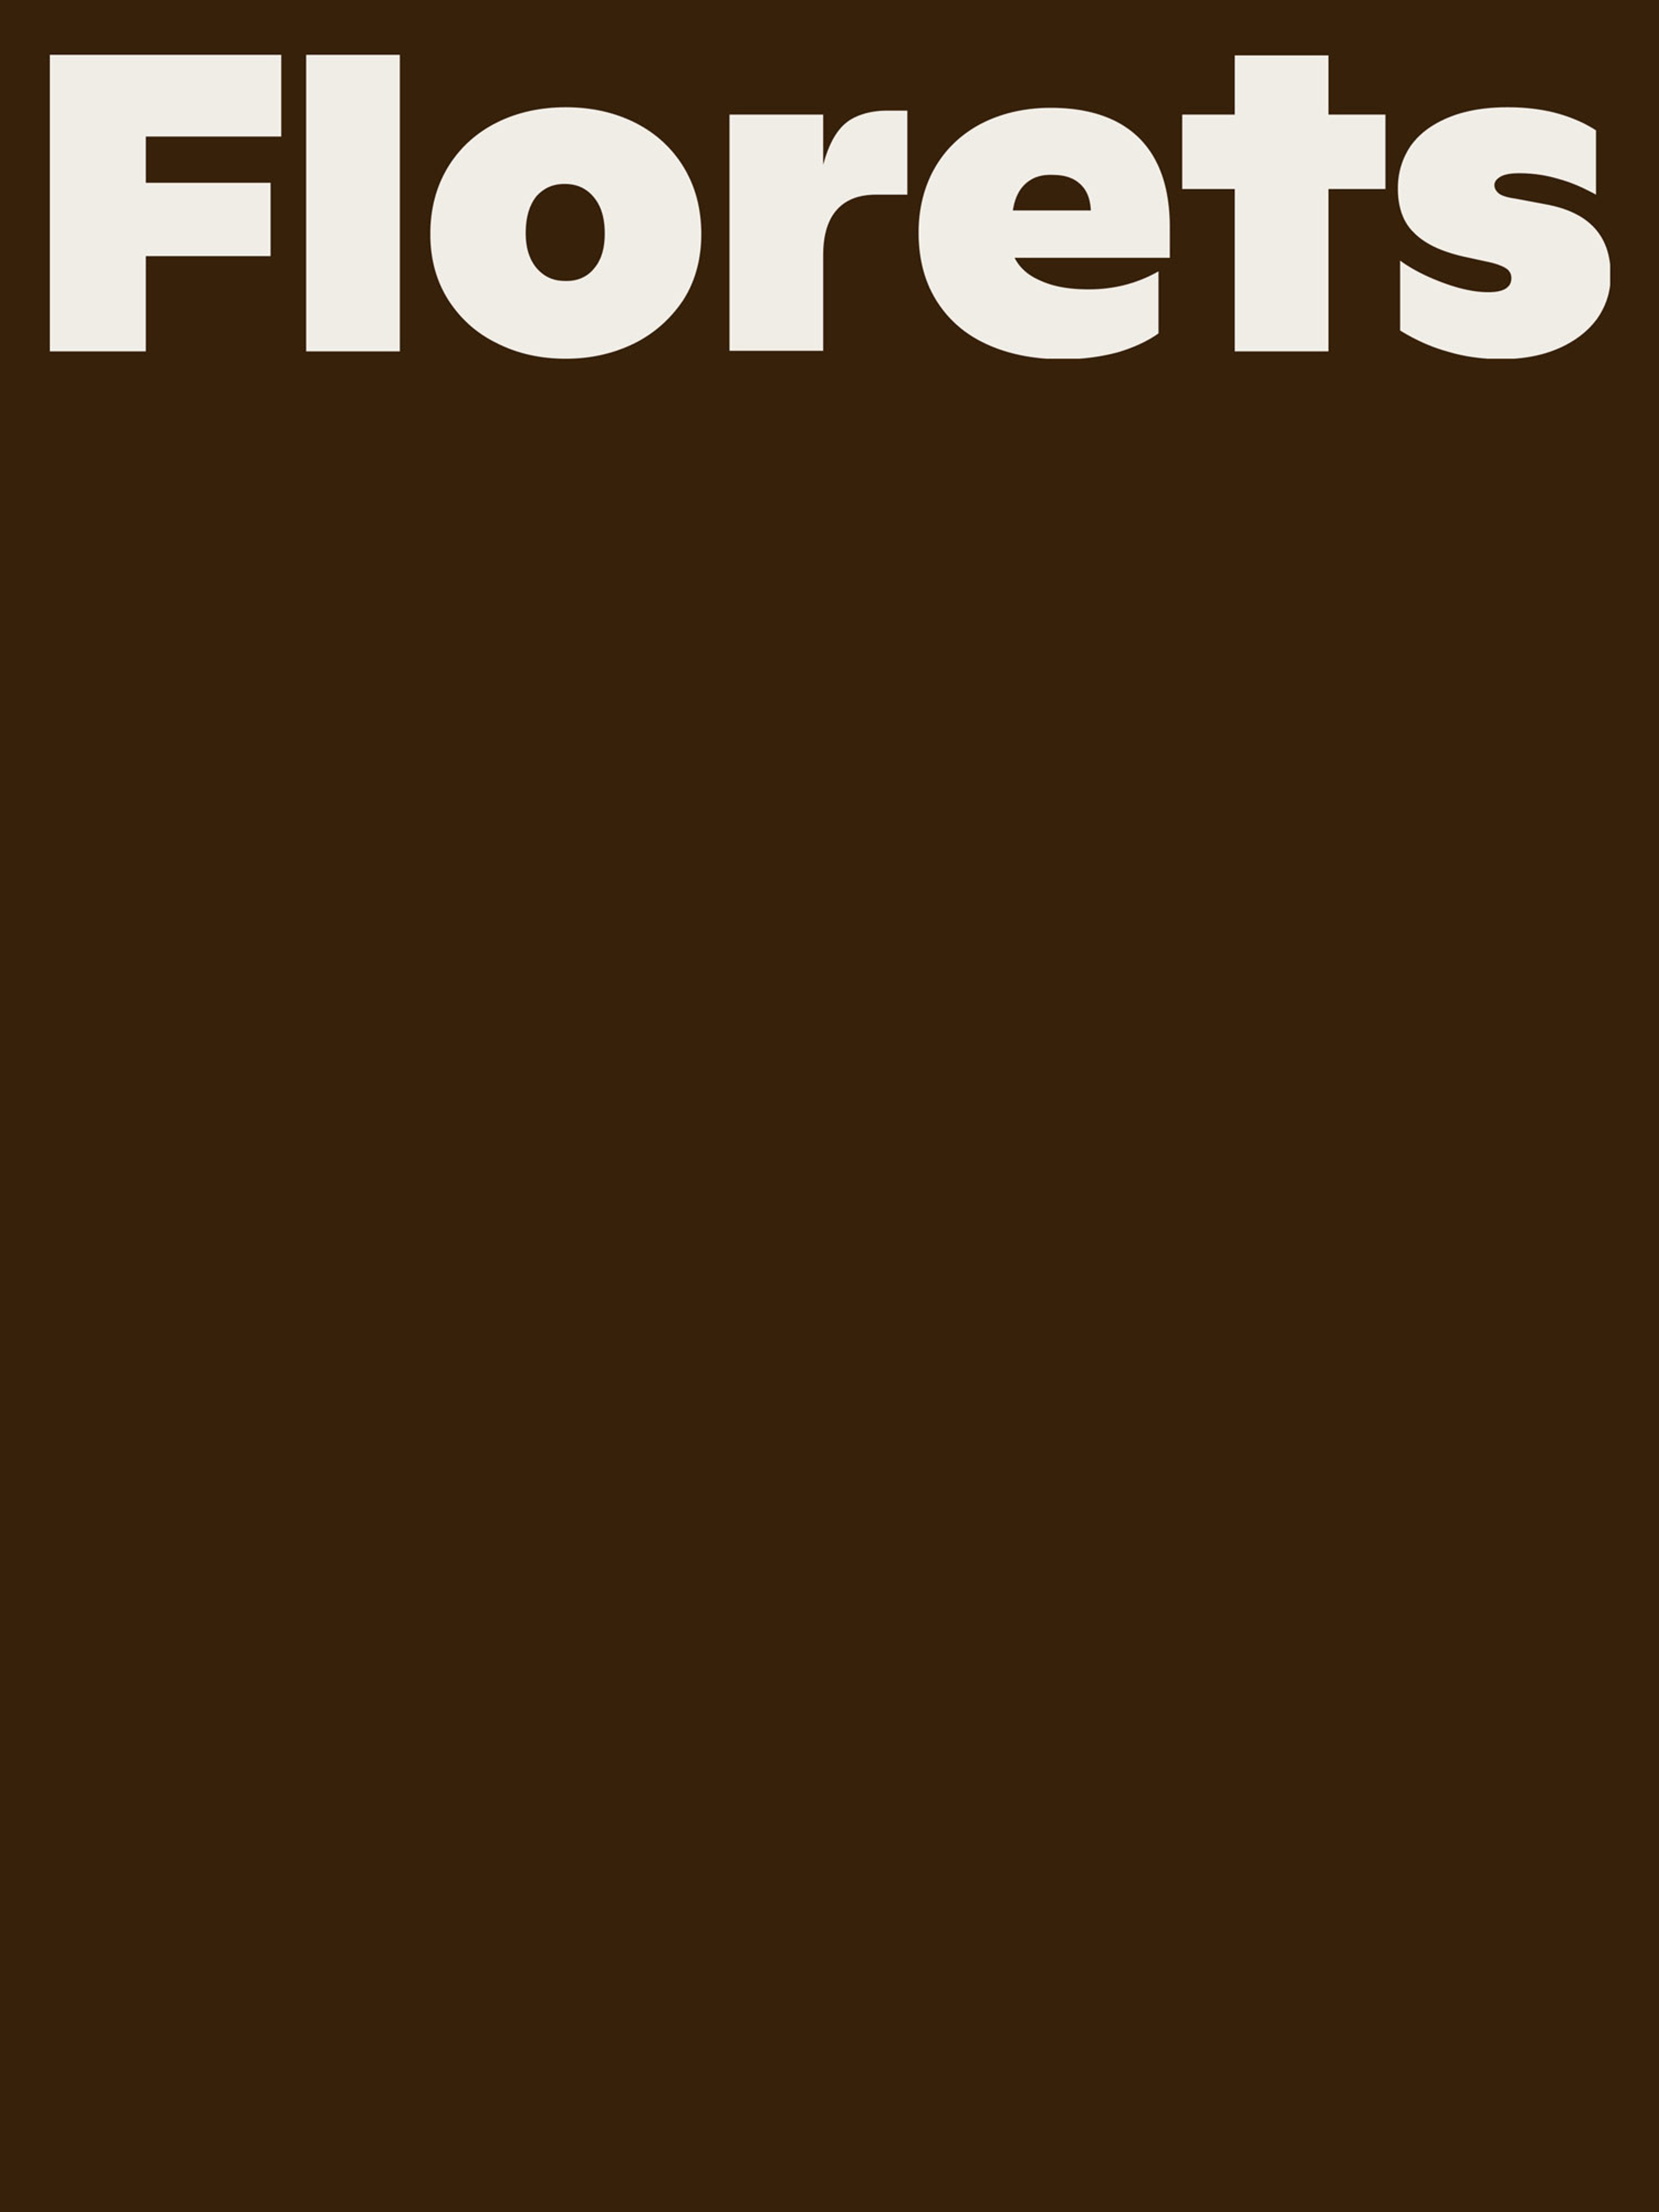 Florets Logotype